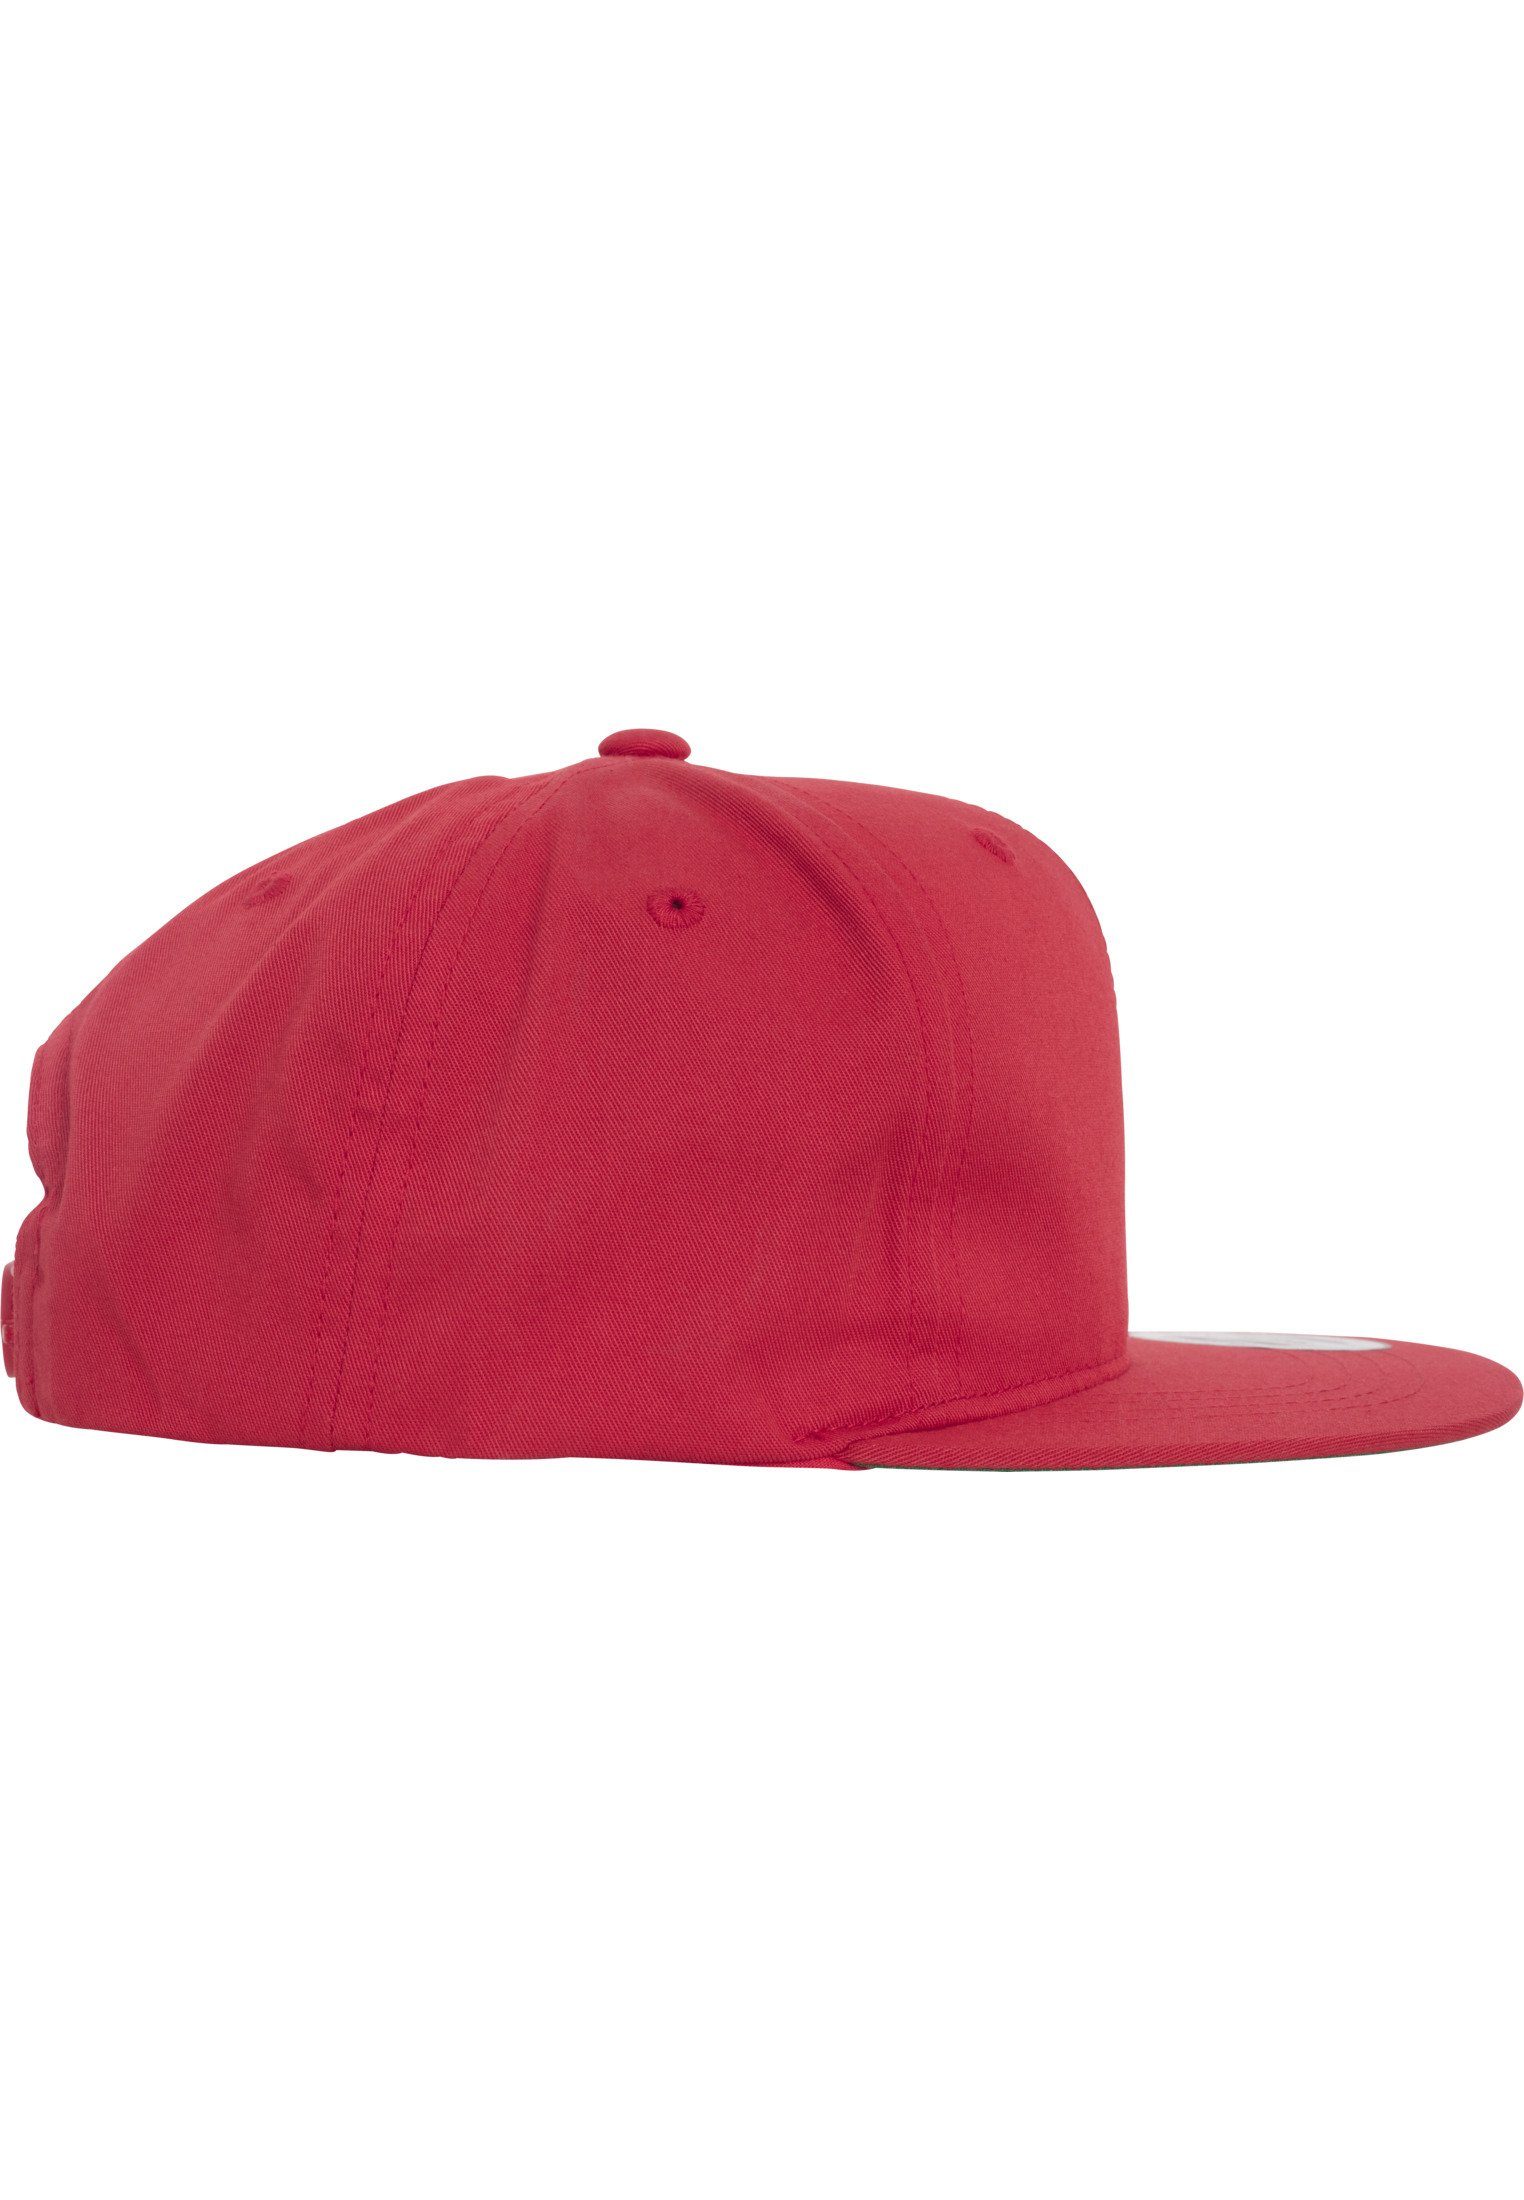 Flexfit Flex Cap Snapback Pro-Style Twill Snapback red Youth Cap